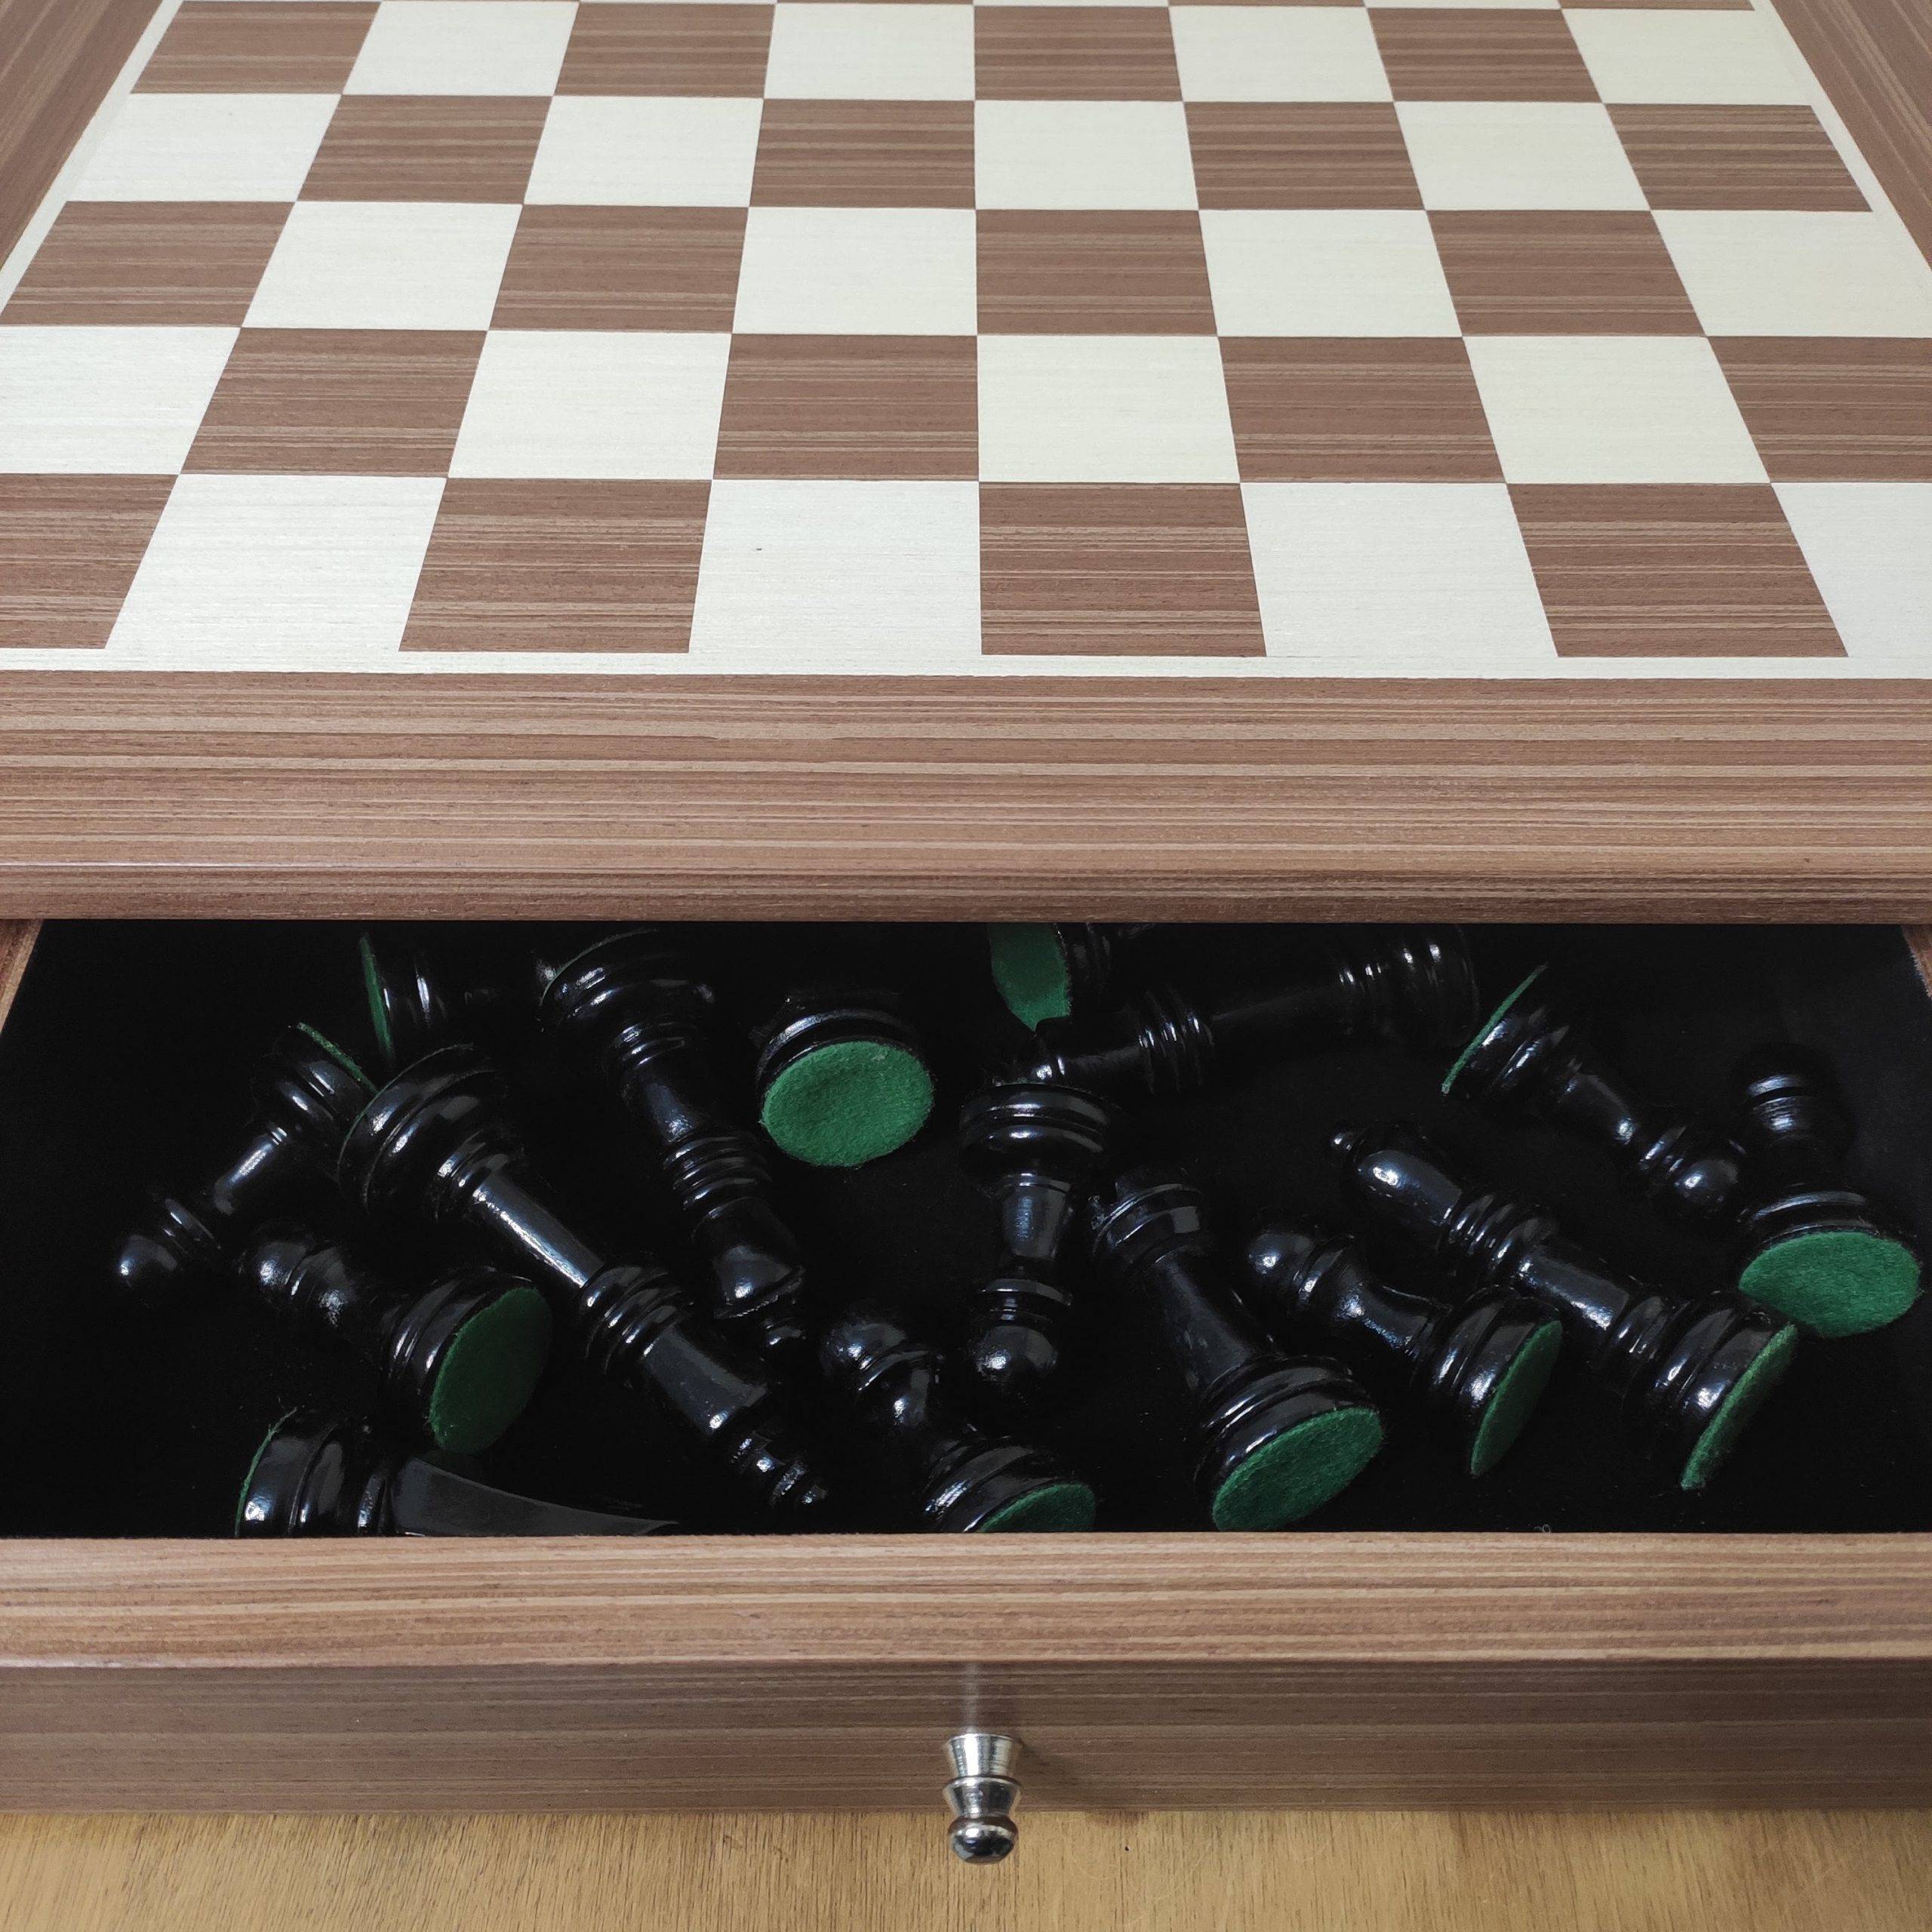 Tabuleiro de xadrez com gavetas